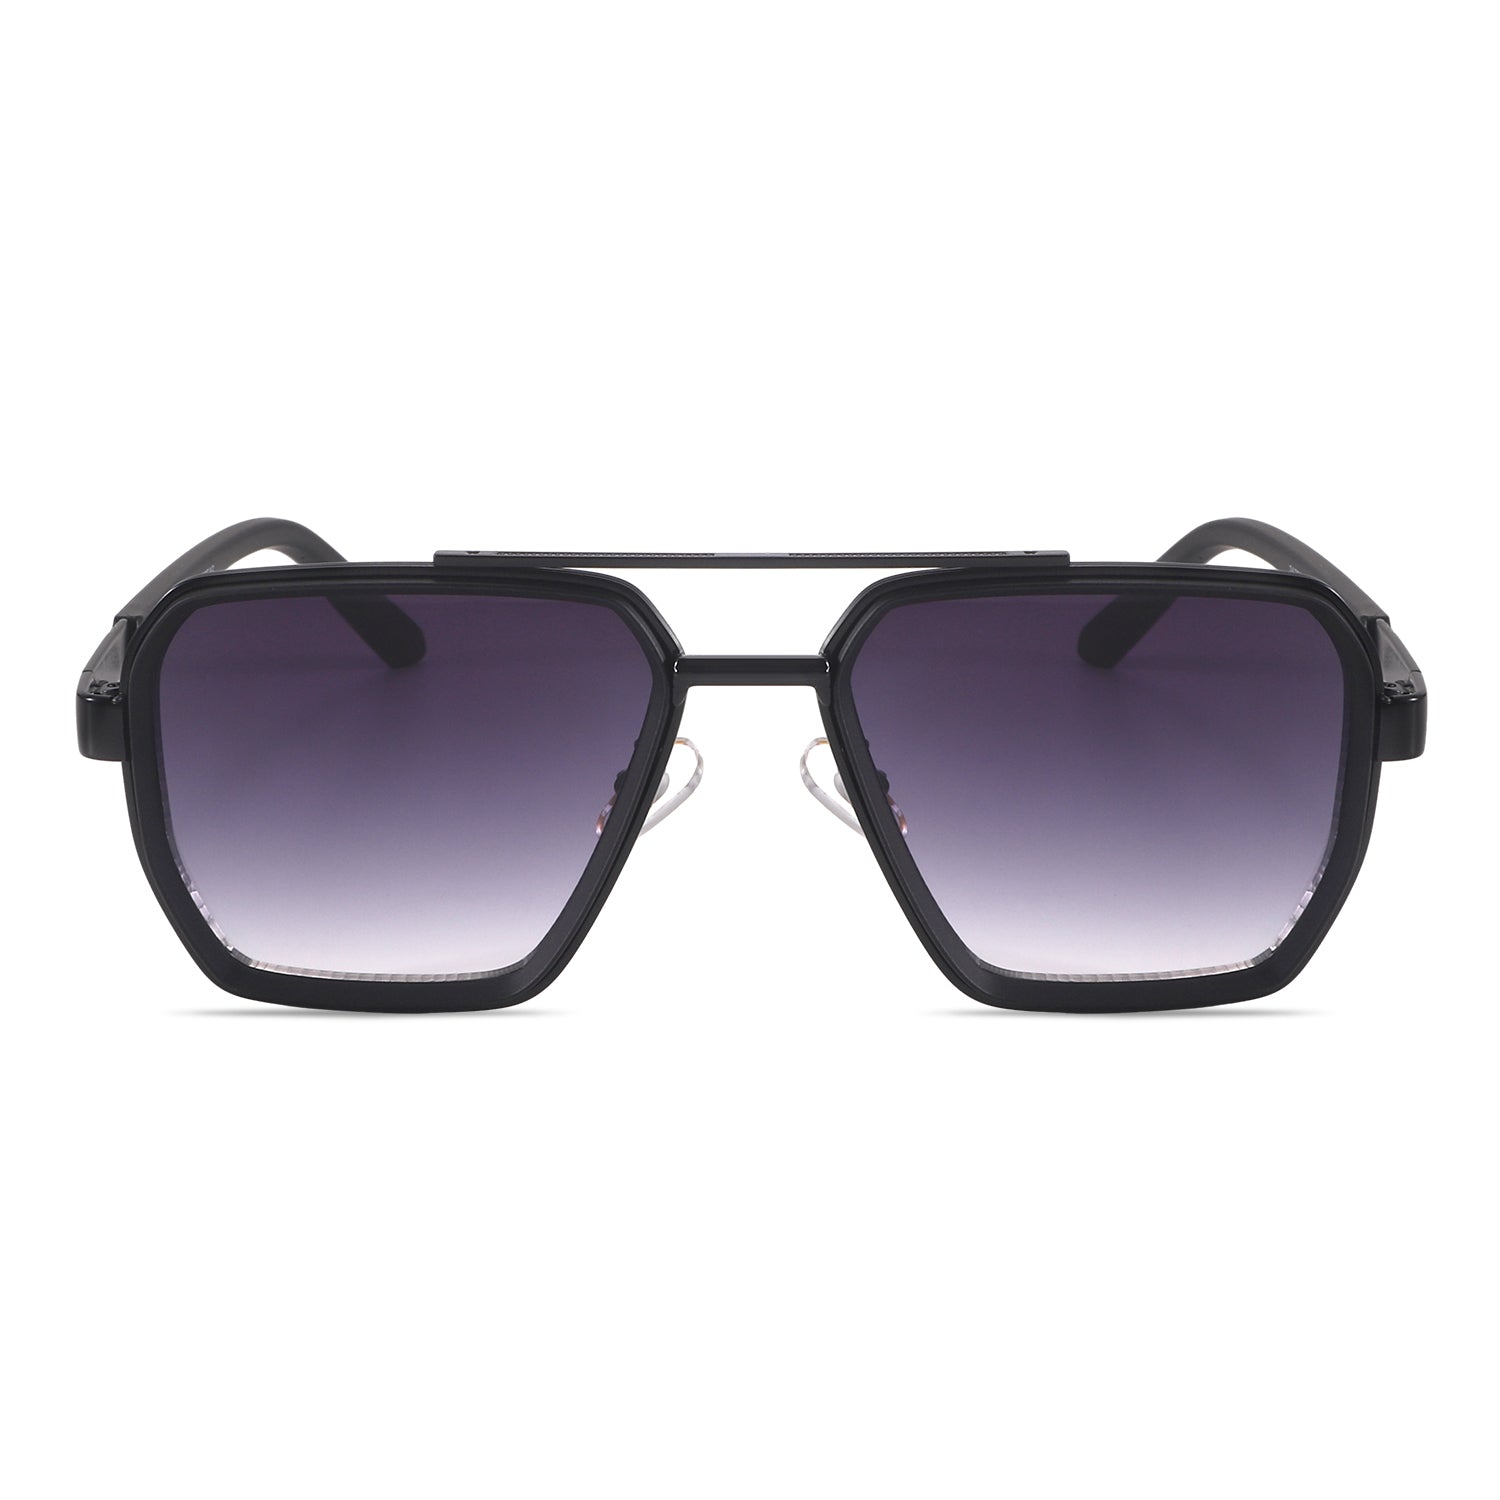 Black acetate aviator tinted sunglasses